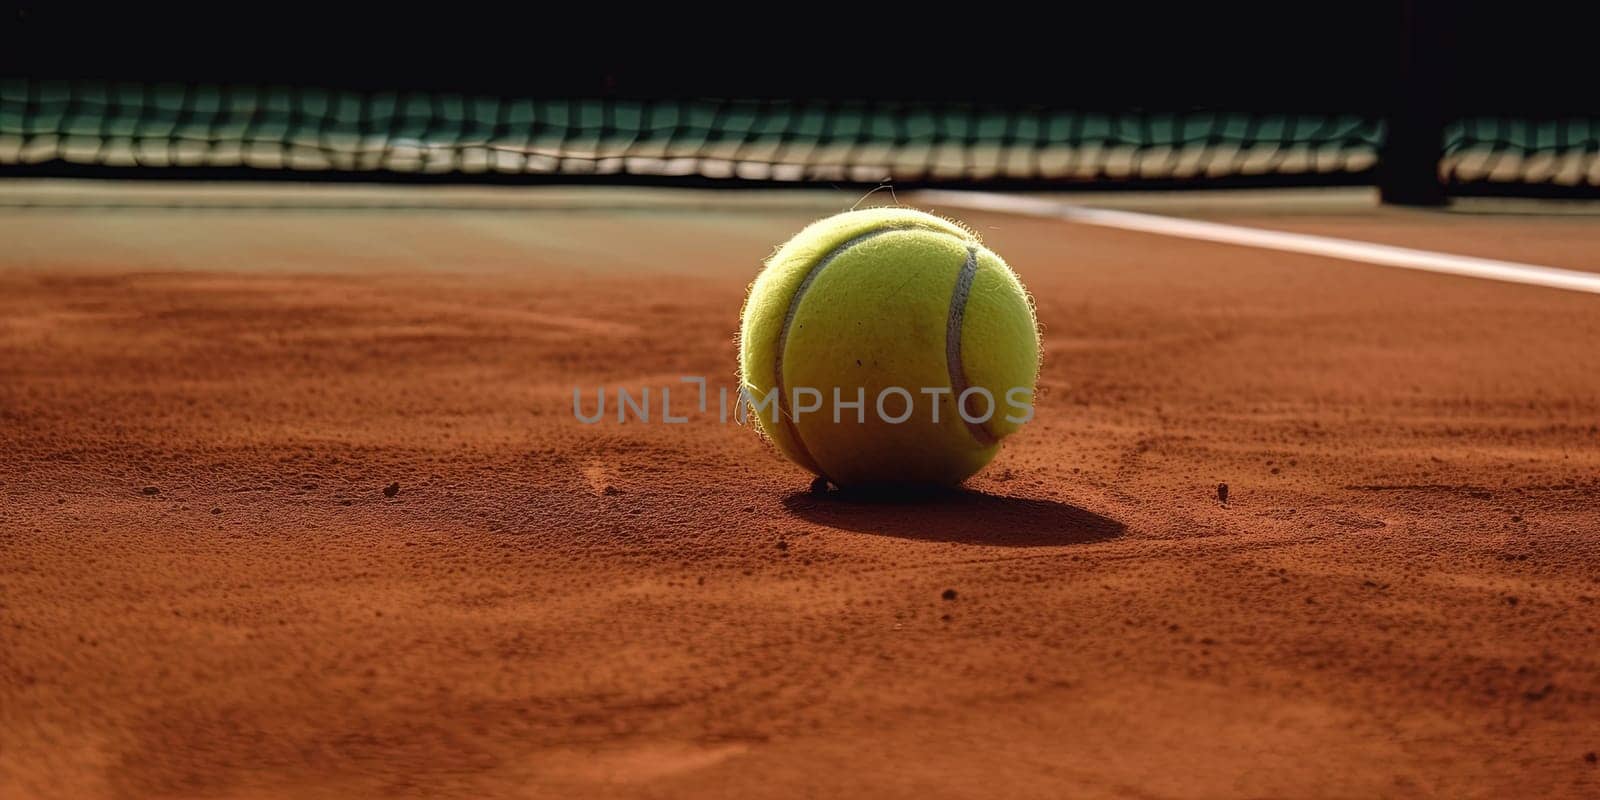 Lawn Tennis Ball On A Ground Tennis Court by tan4ikk1